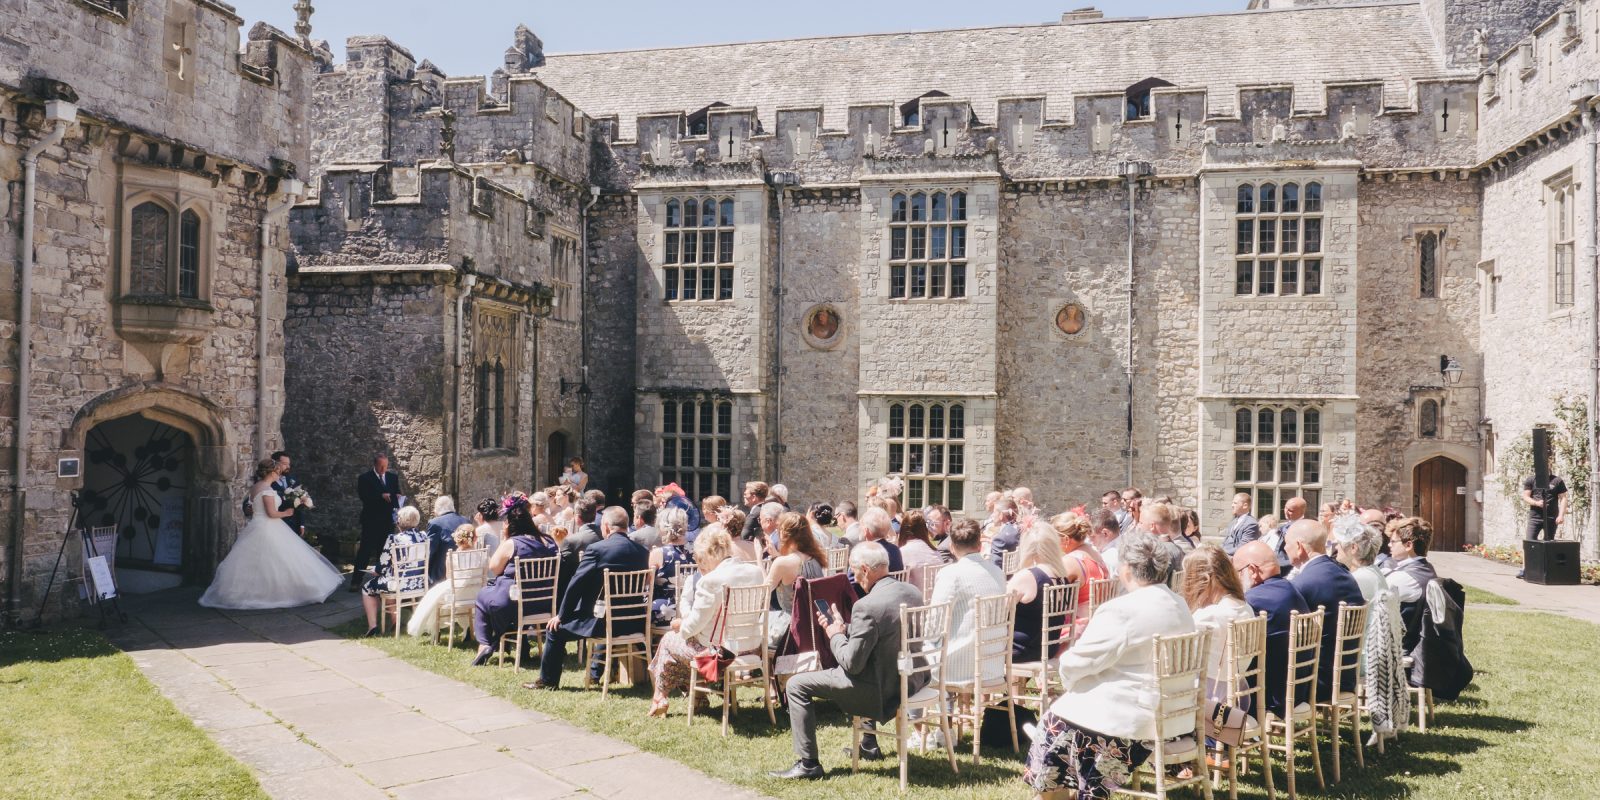 St Donat's Castle inner courtyard outdoor wedding ceremony